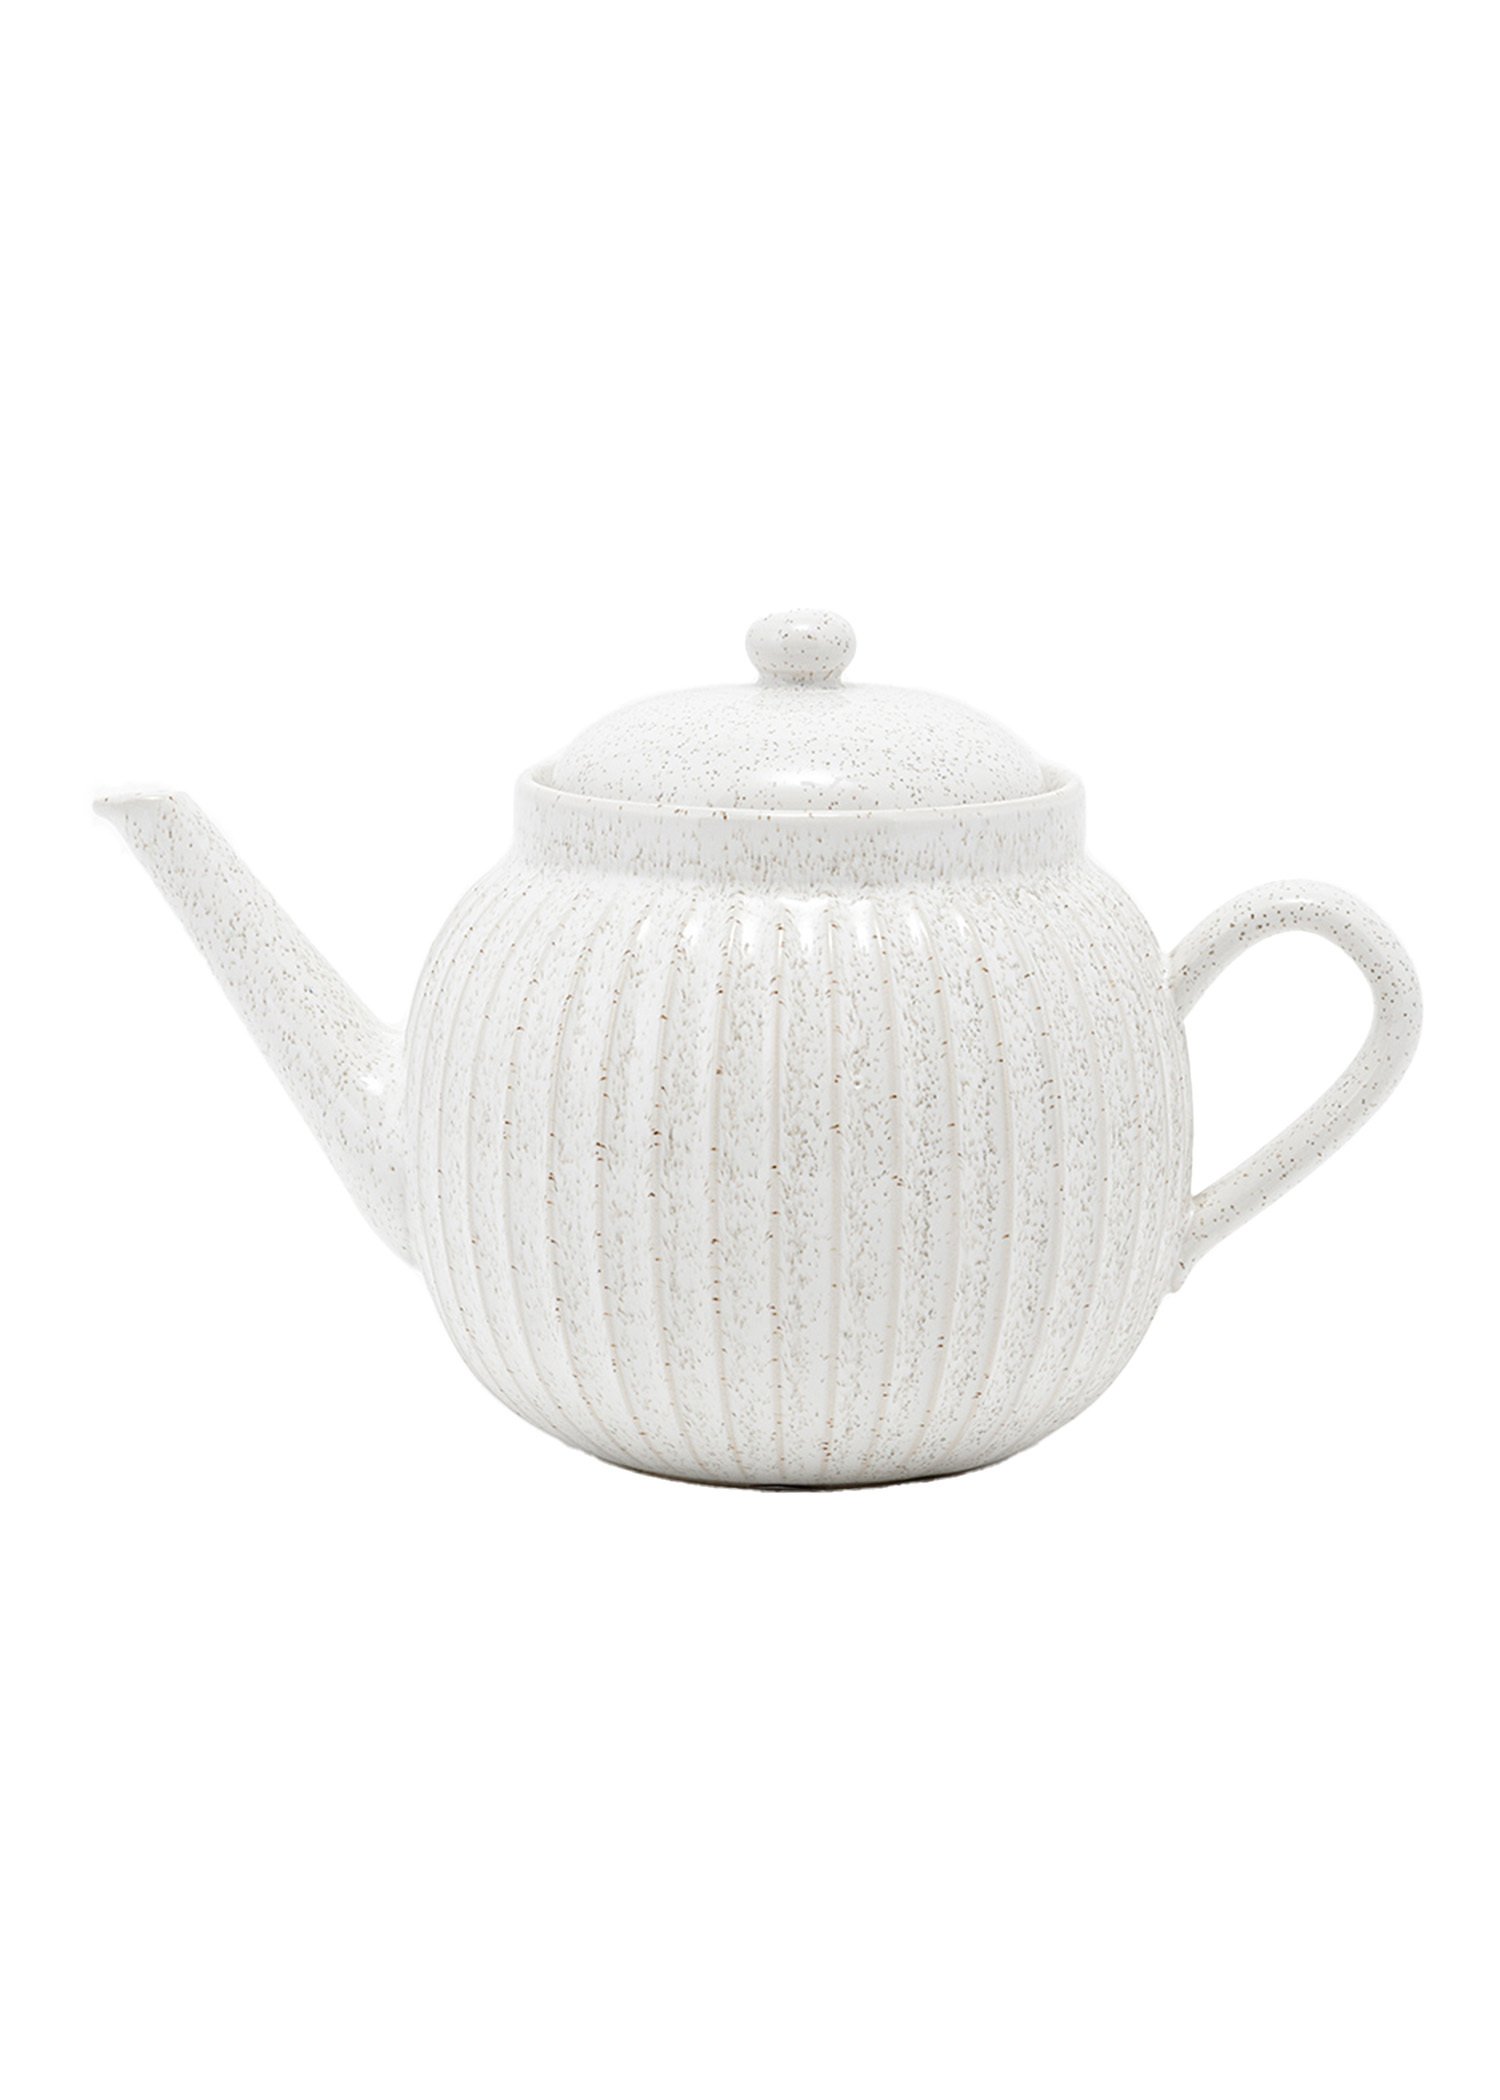 Beige stoneware teapot